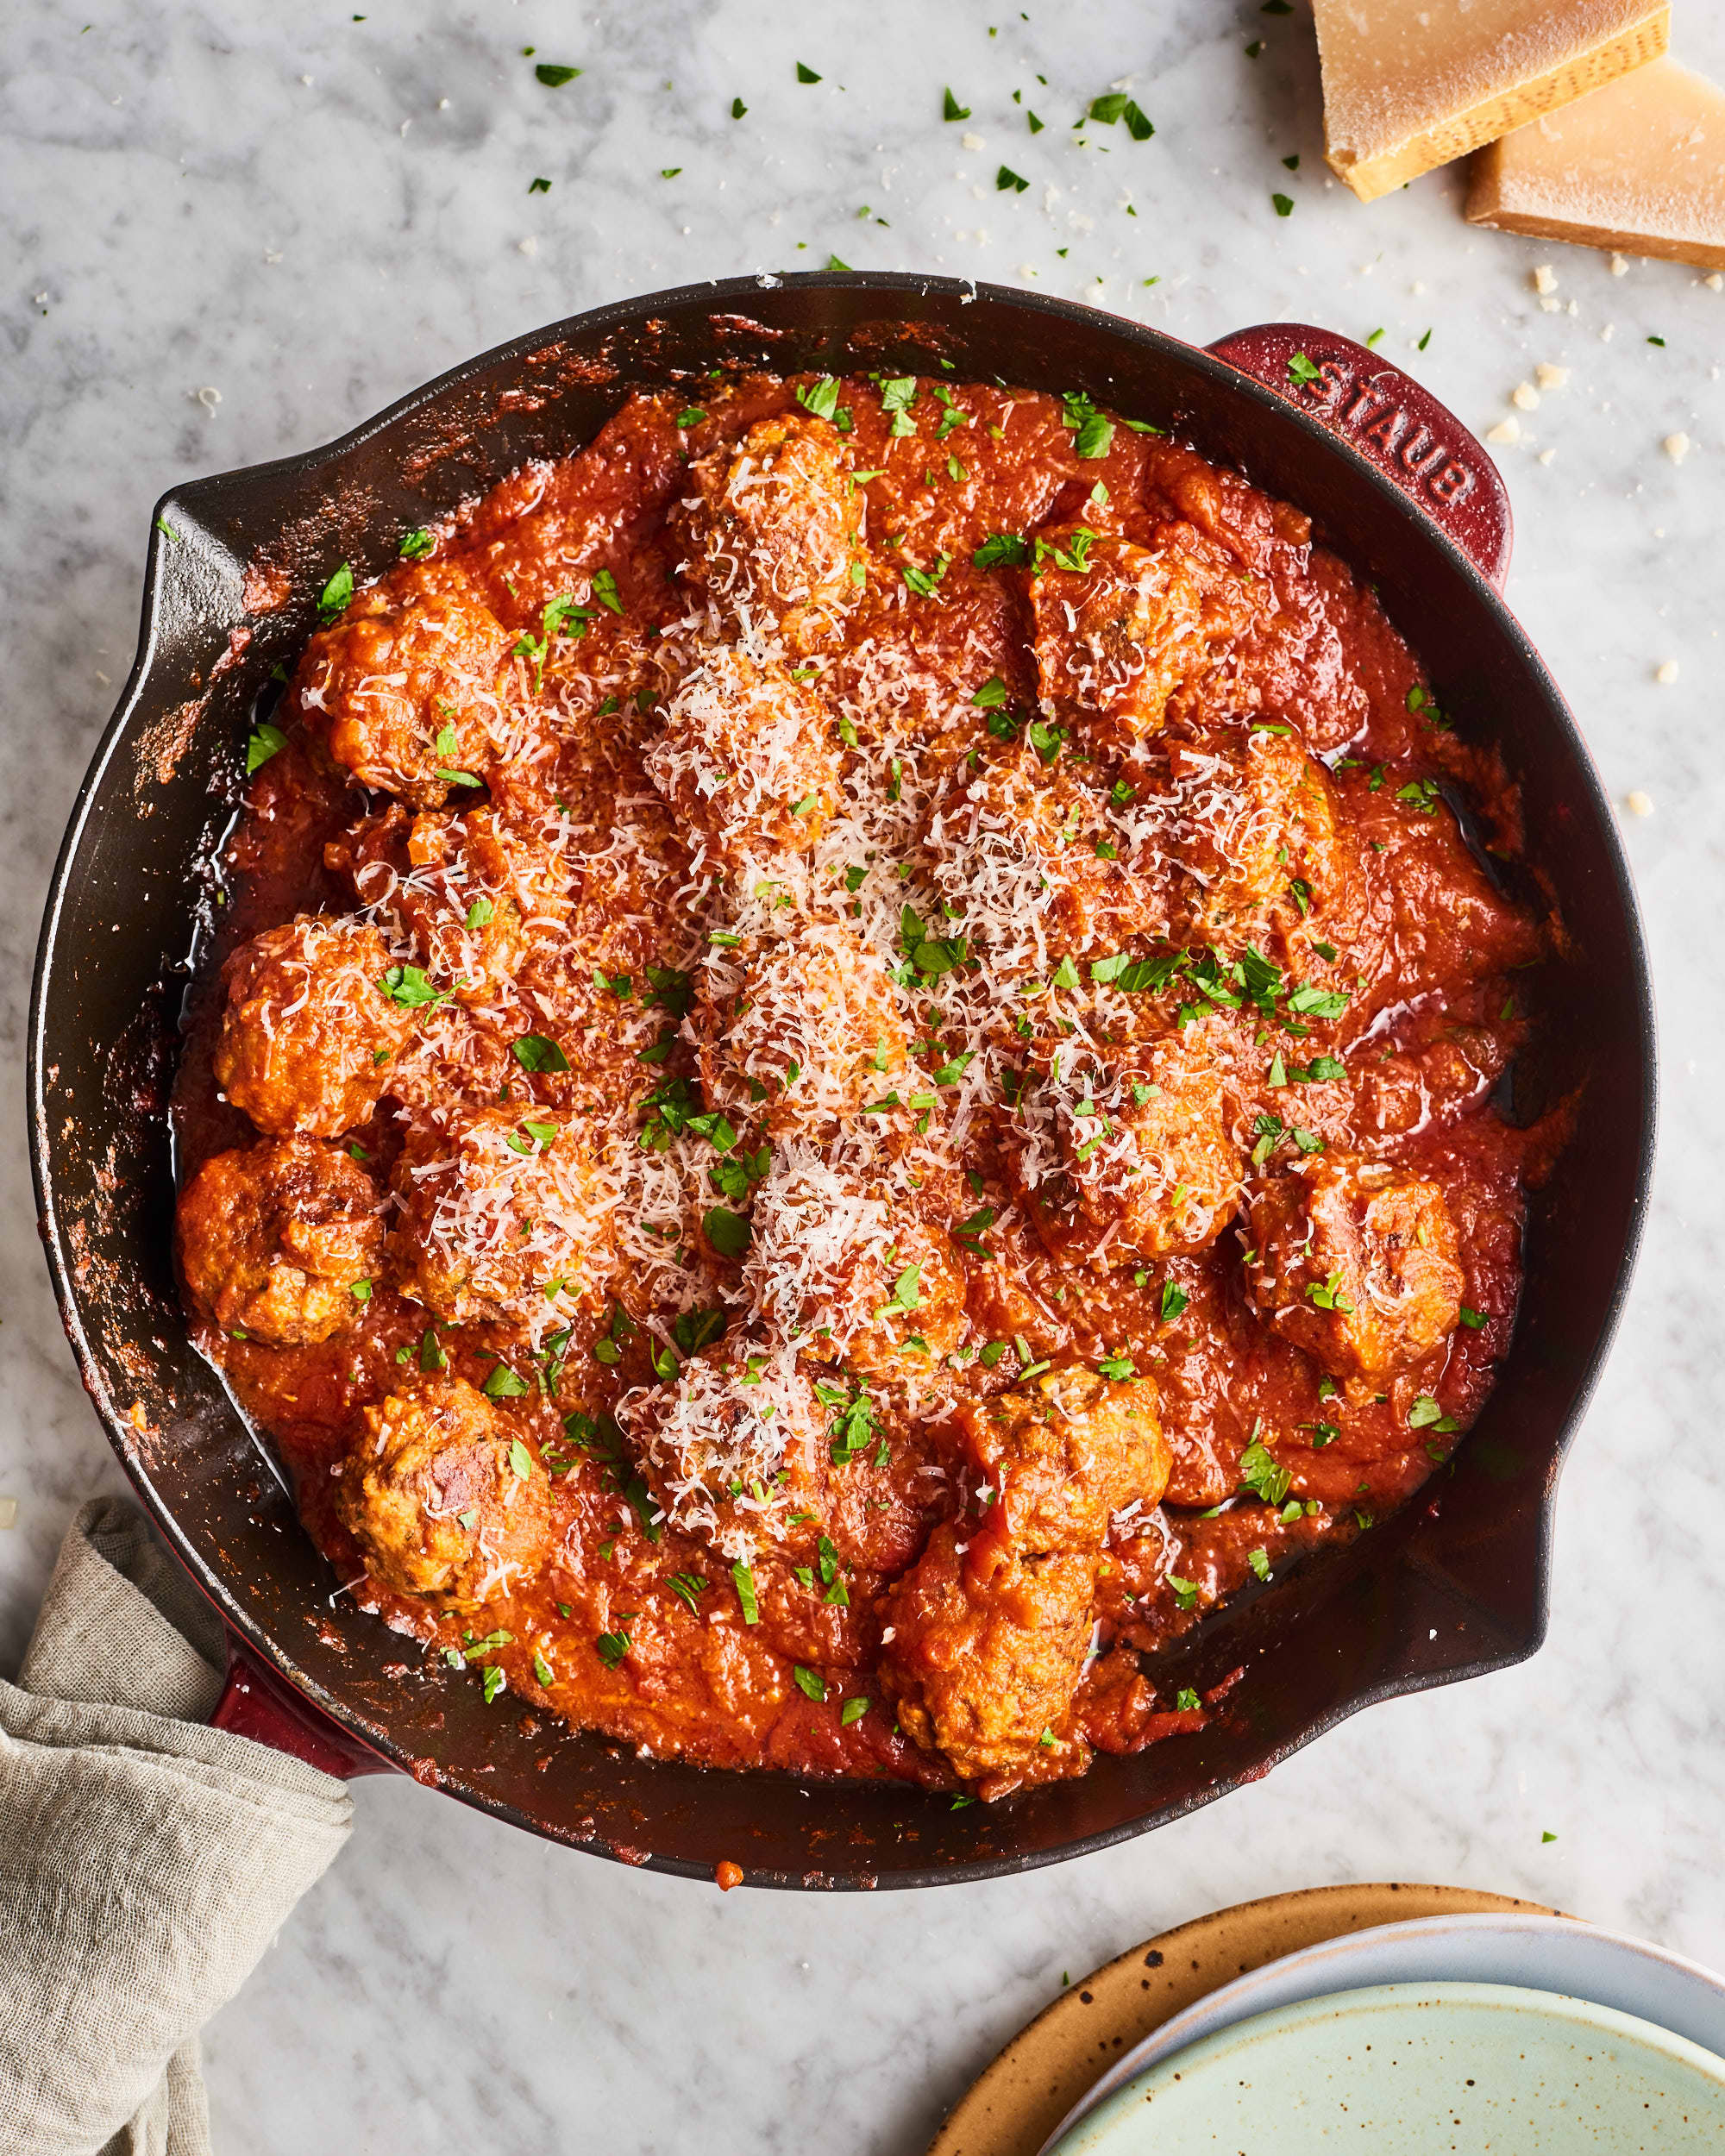 https://cdn.apartmenttherapy.info/image/upload/v1568404926/k/Photo/Recipes/2019-09-recipe-the-best-italian-meatballs/The-Best-Italian-Meatballs_085.jpg